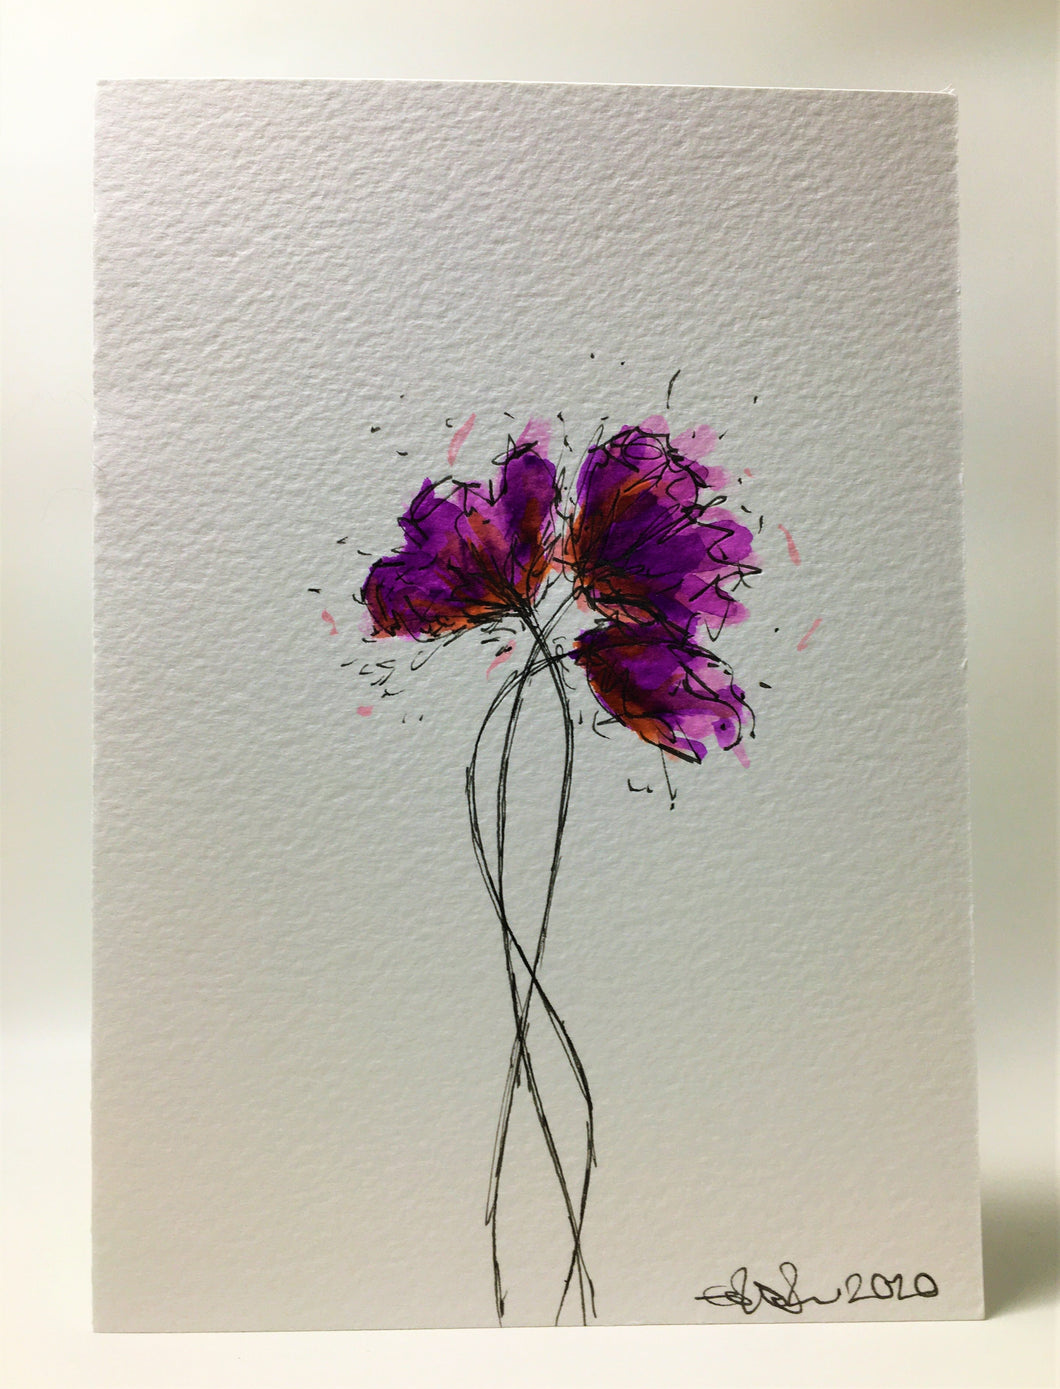 Original Hand Painted Greeting Card - Three Purple and Orange Poppies - eDgE dEsiGn London